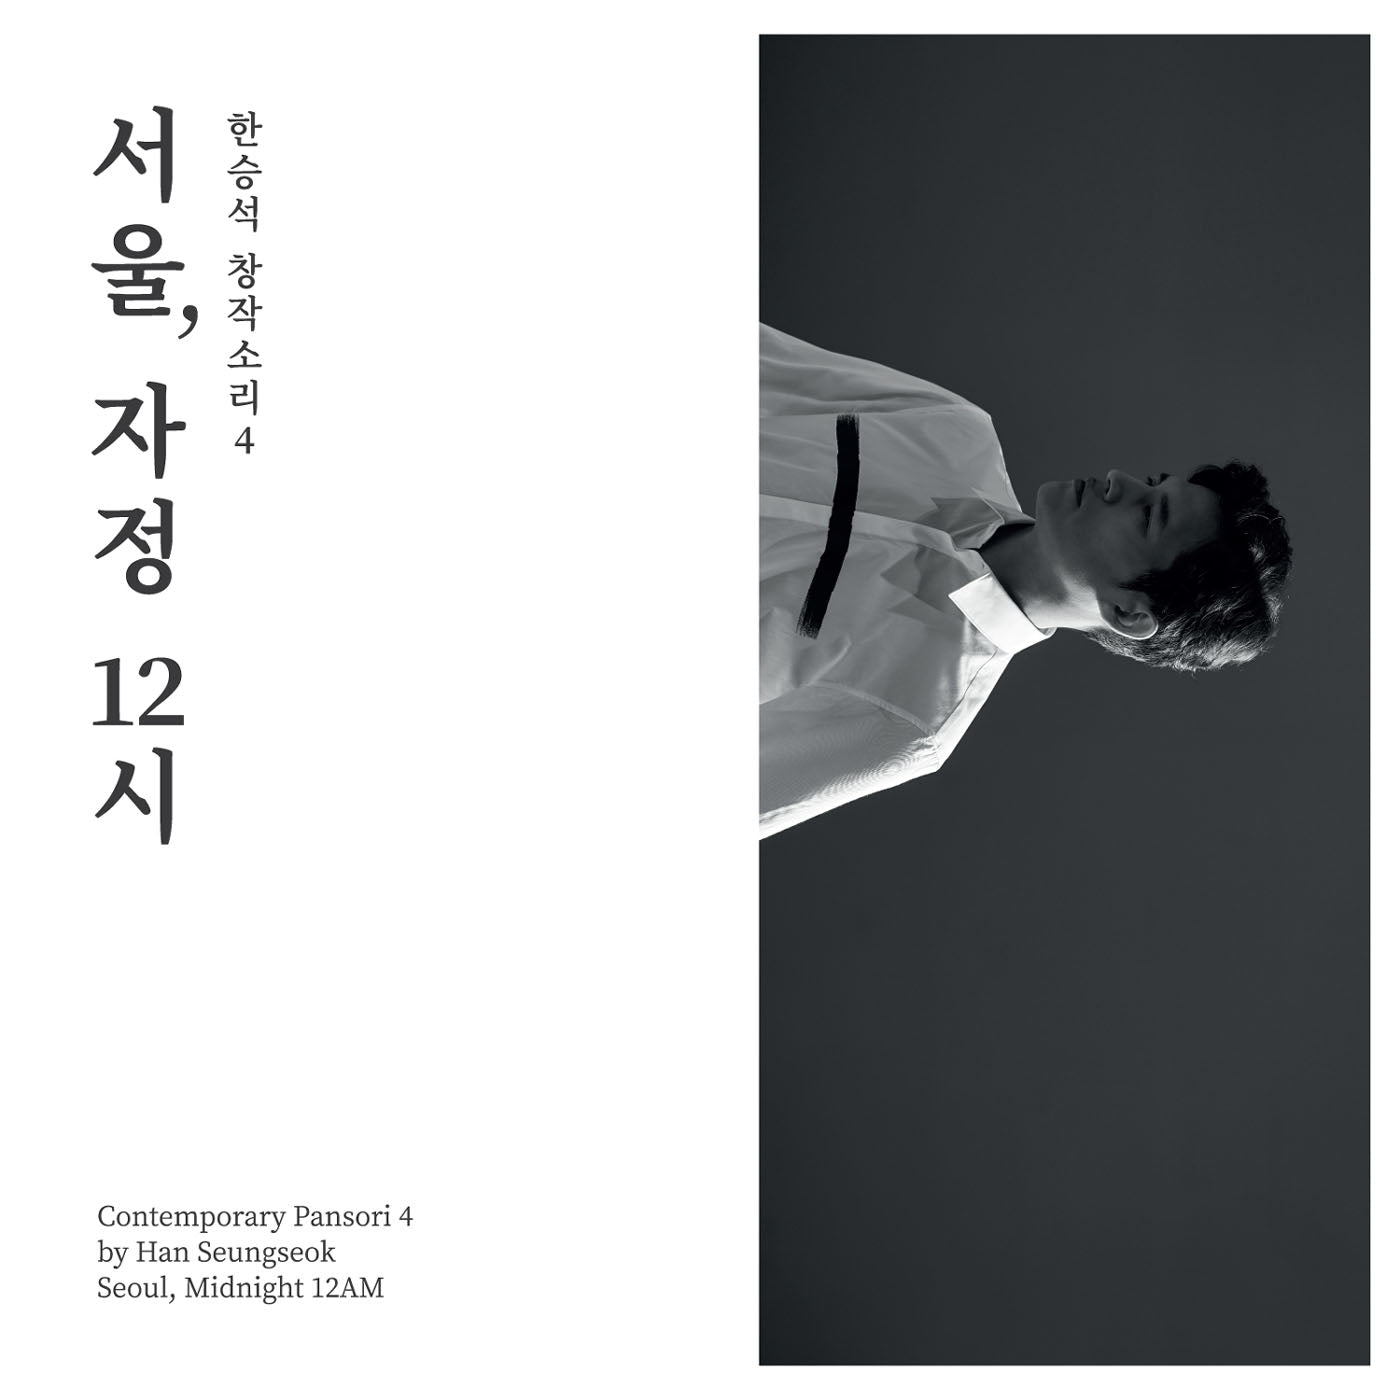 Han Seungseok - Seoul, Midnight 12 AM